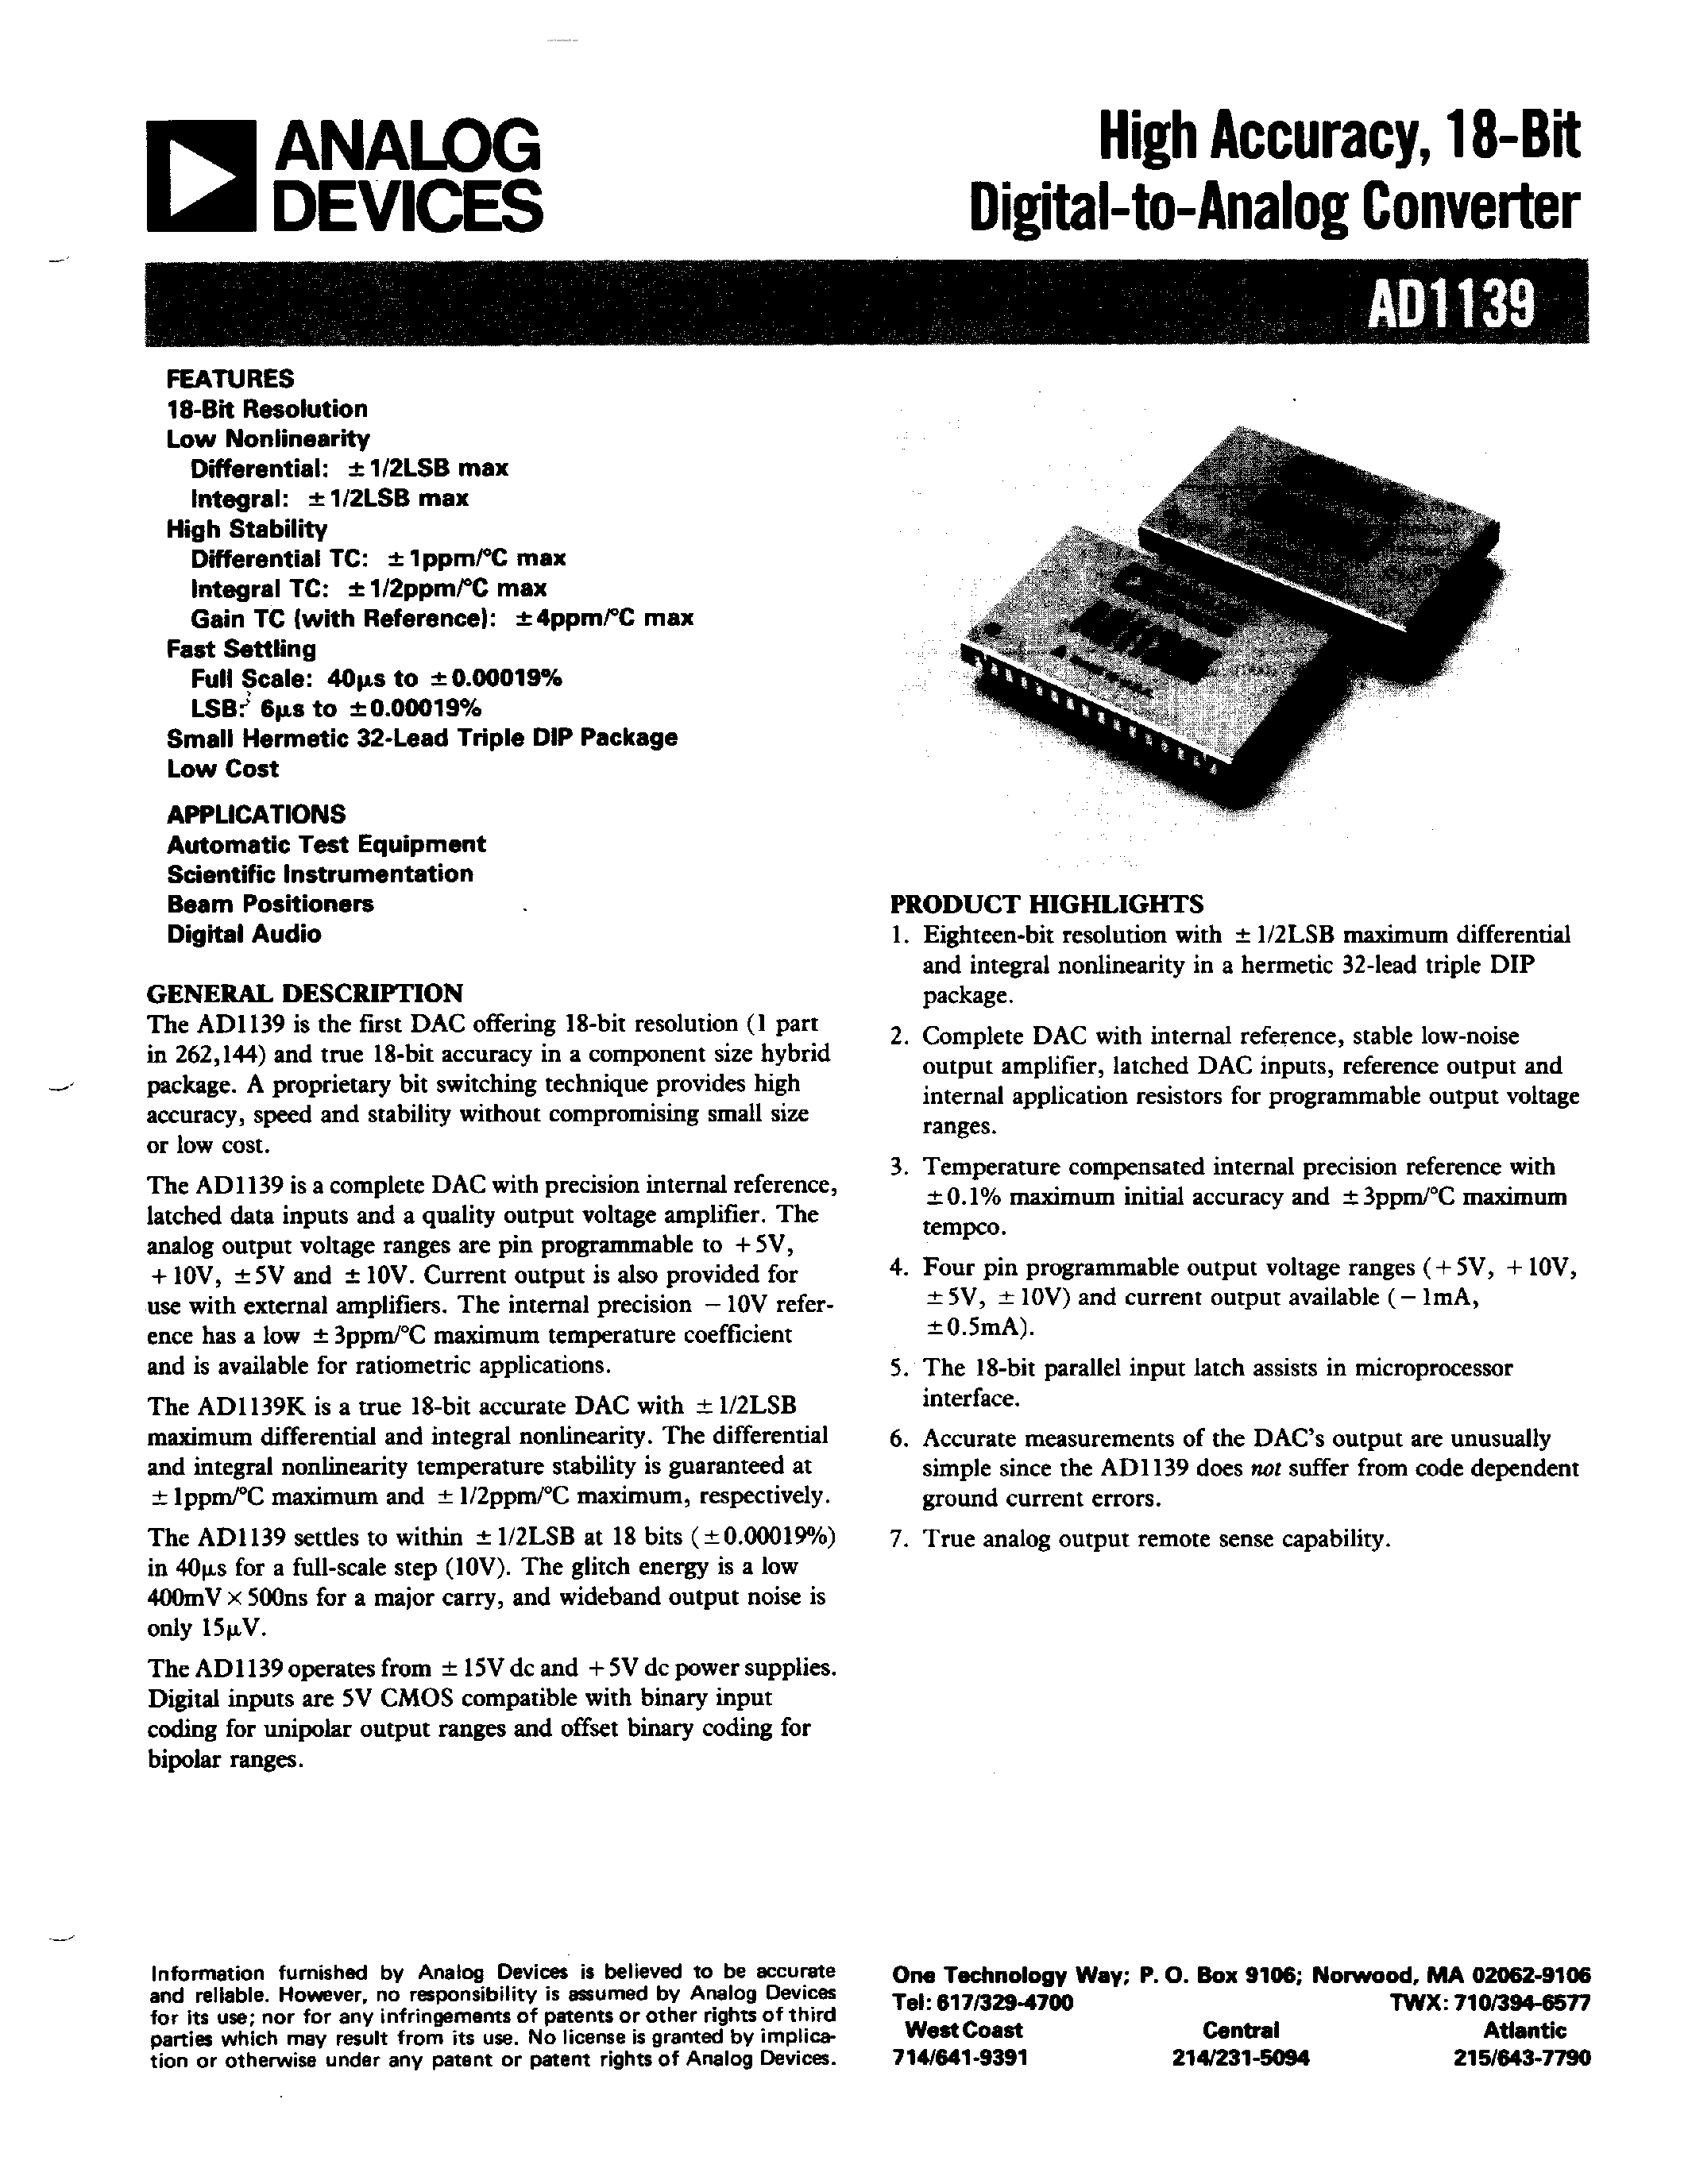 Datasheet AD1139K - High Accuracy 18-Bit Digital-to-Analog Converter page 1